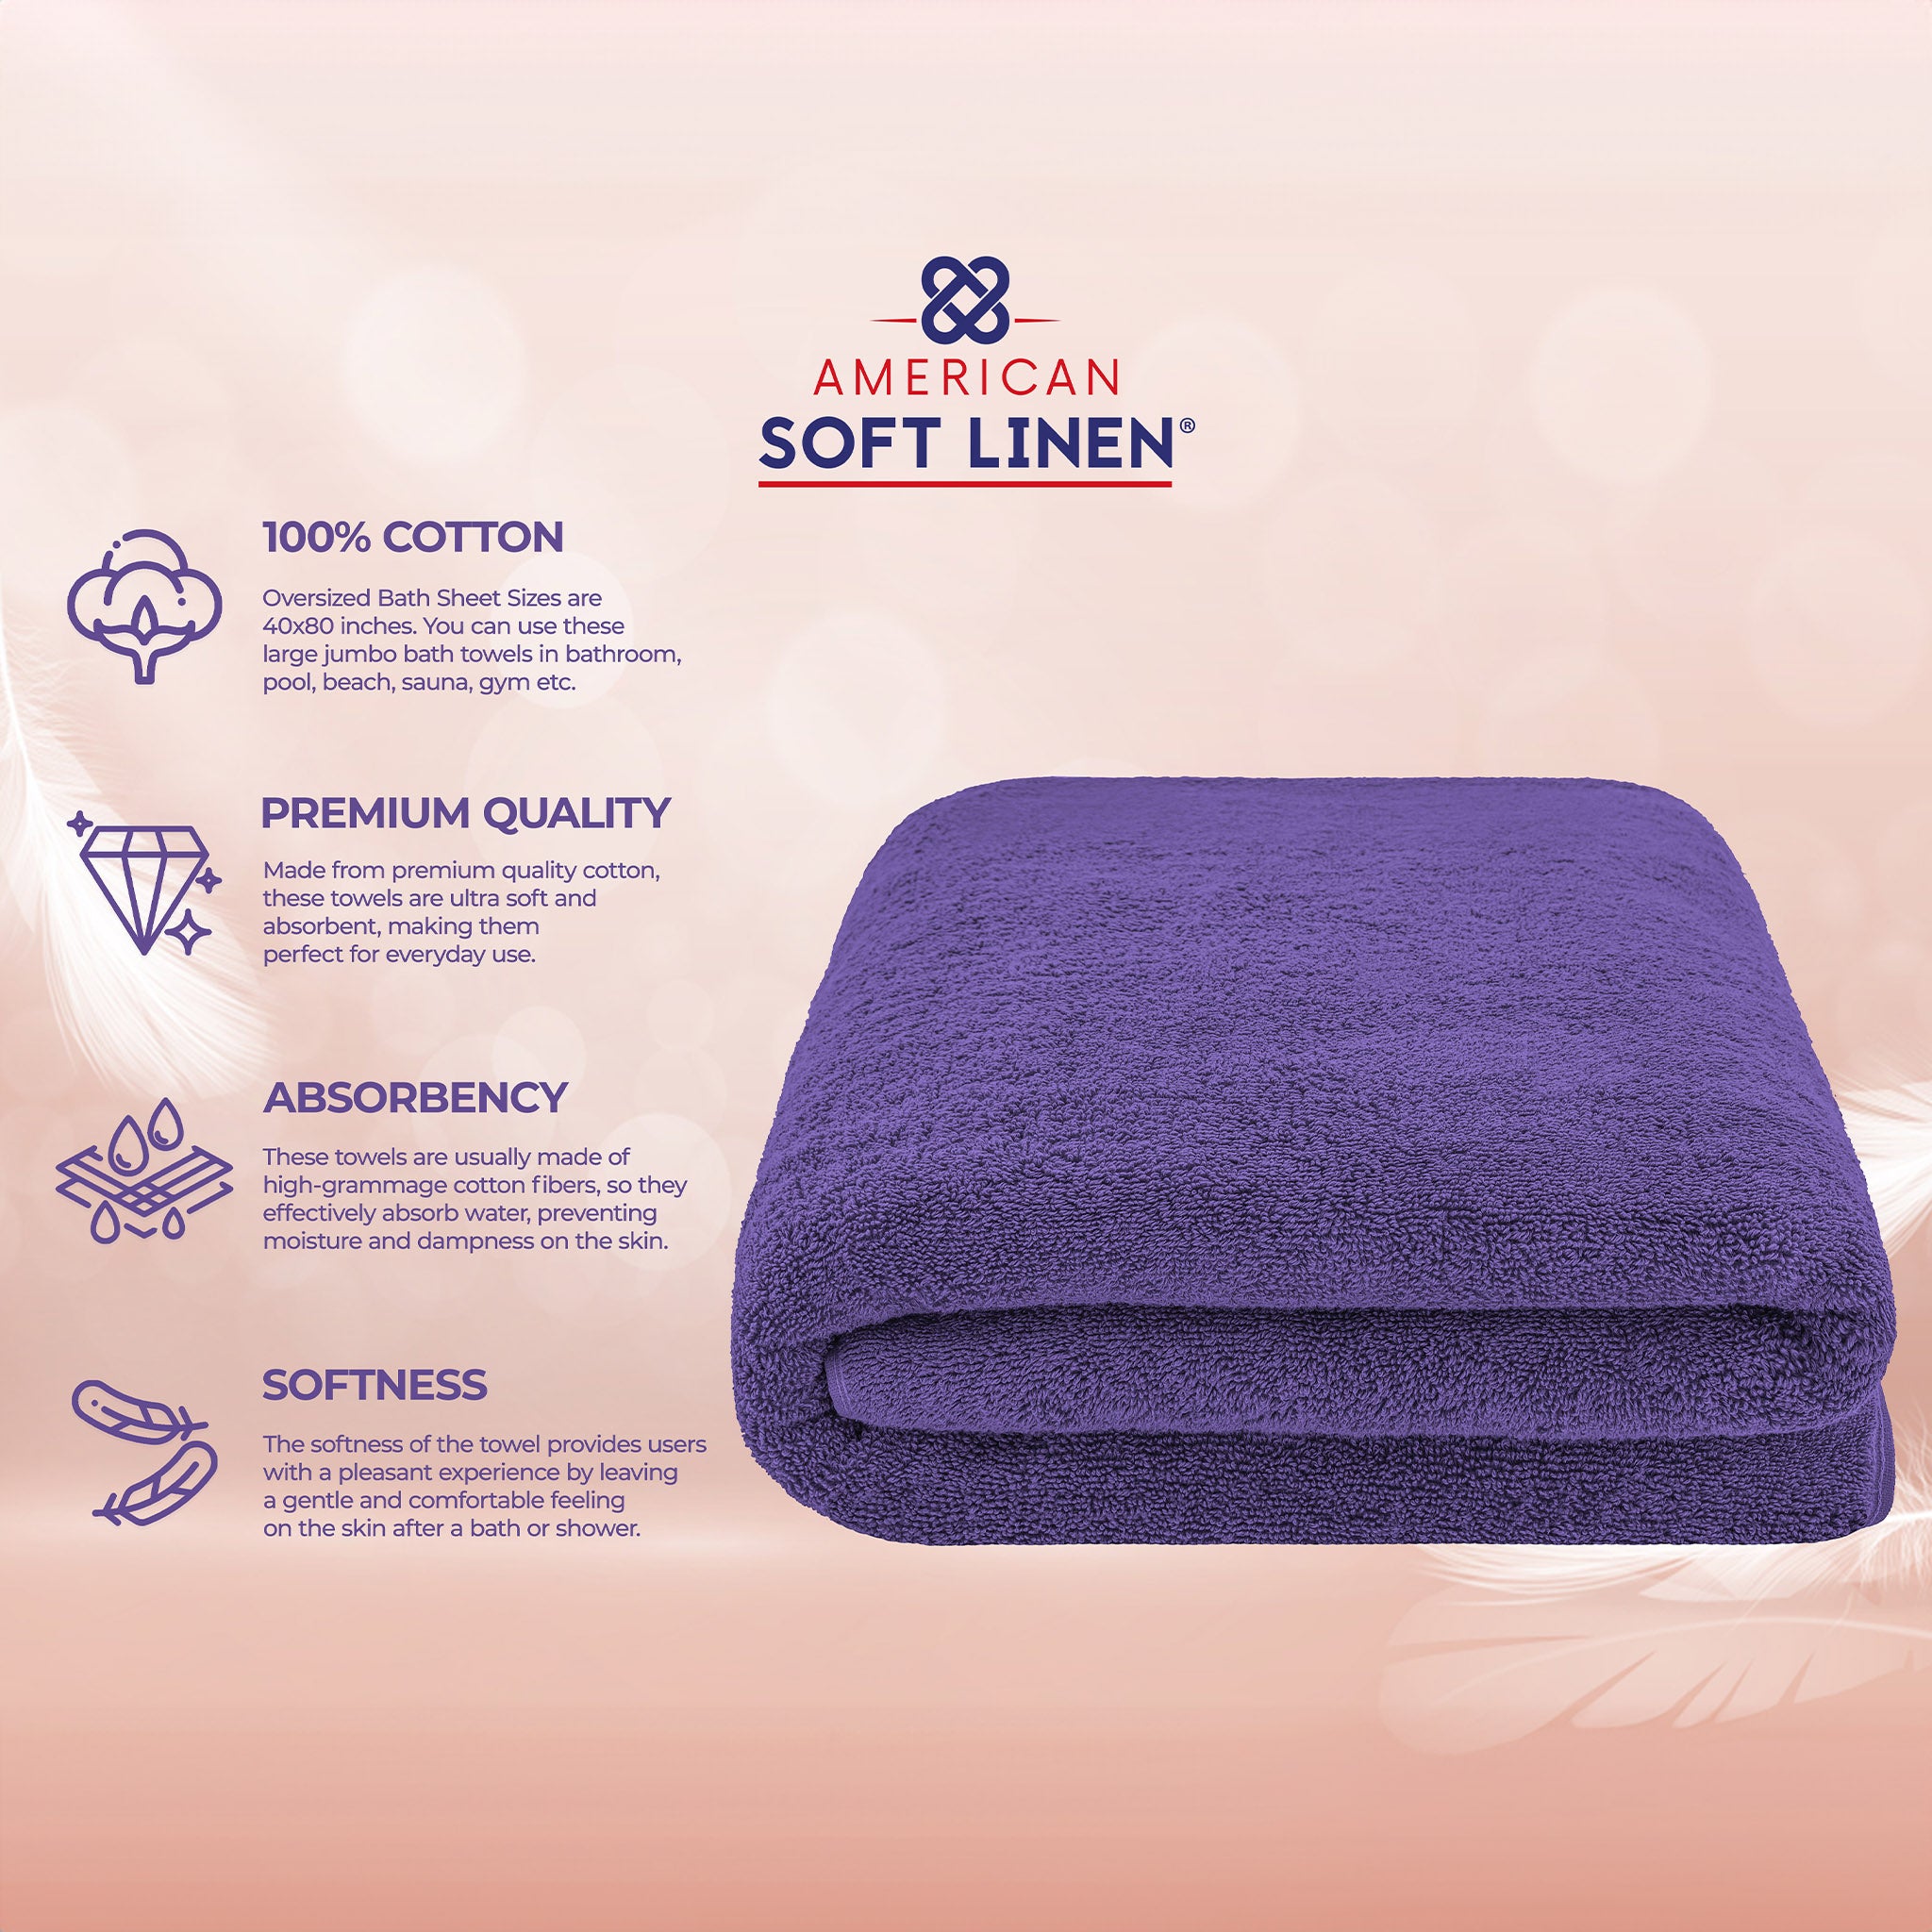 American Soft Linen 100% Ring Spun Cotton 40x80 Inches Oversized Bath Sheets purple-4